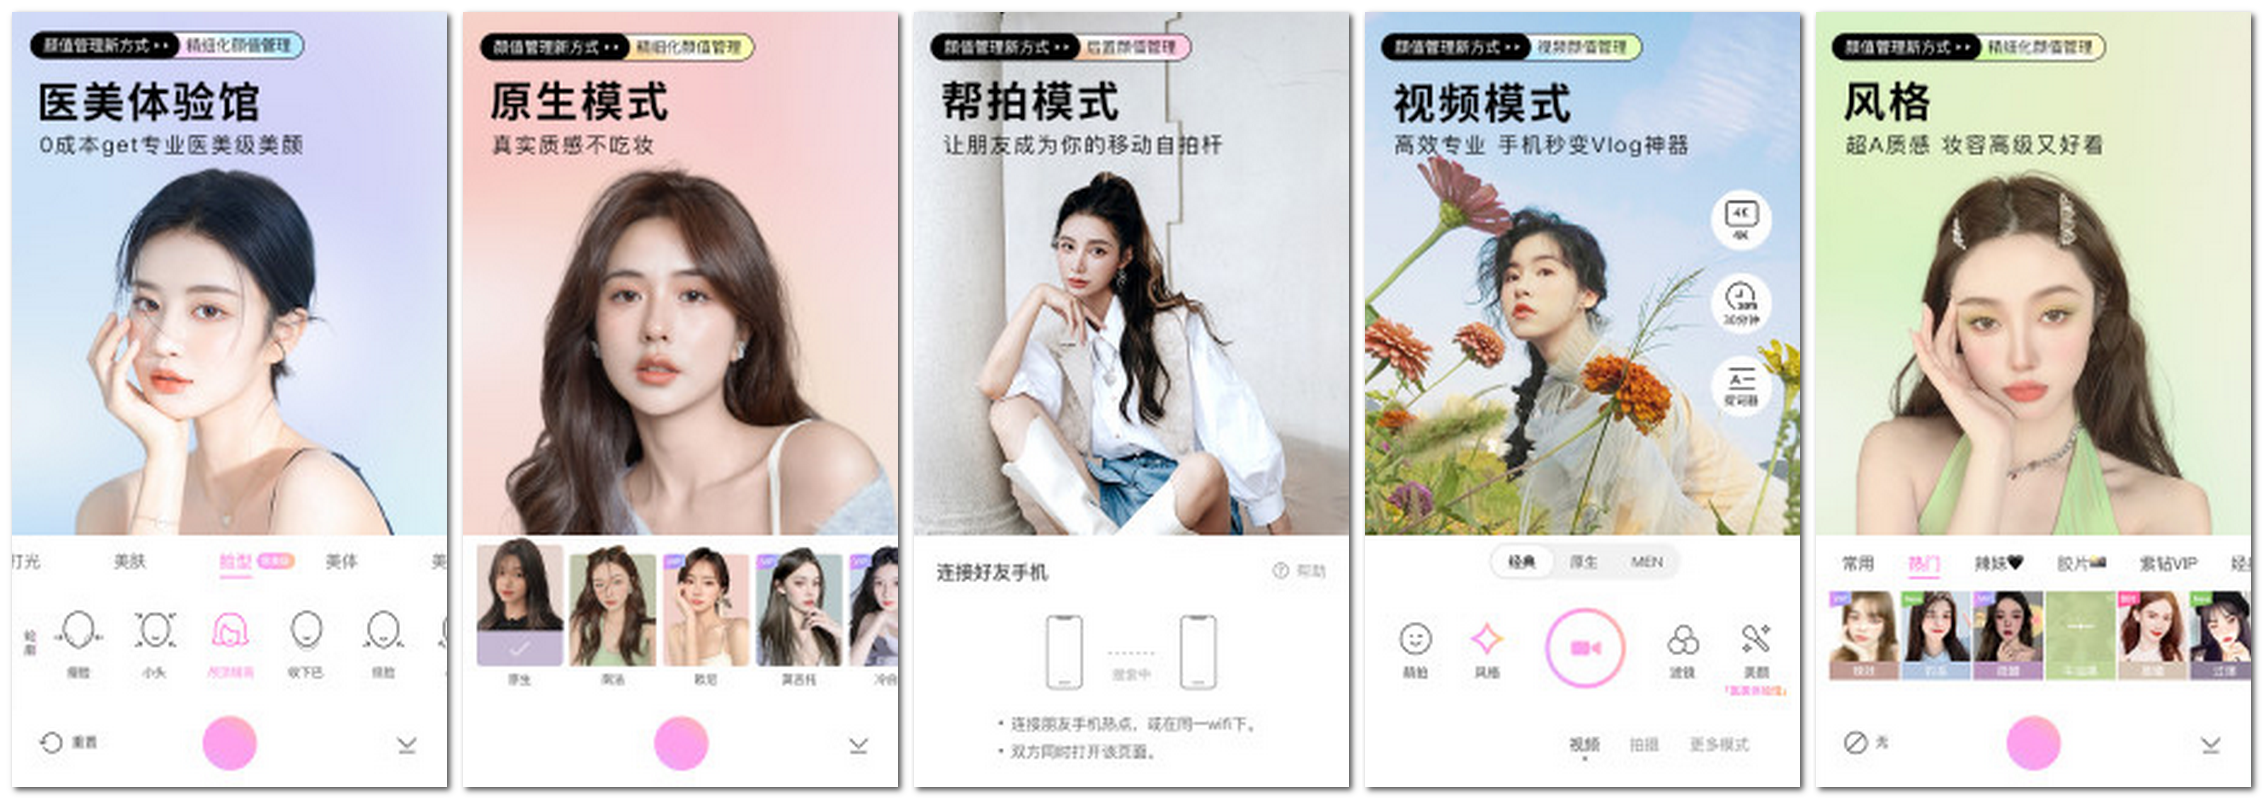 【Android】BeautyCam美颜相机 v10.5.10  去广告、专业版插图